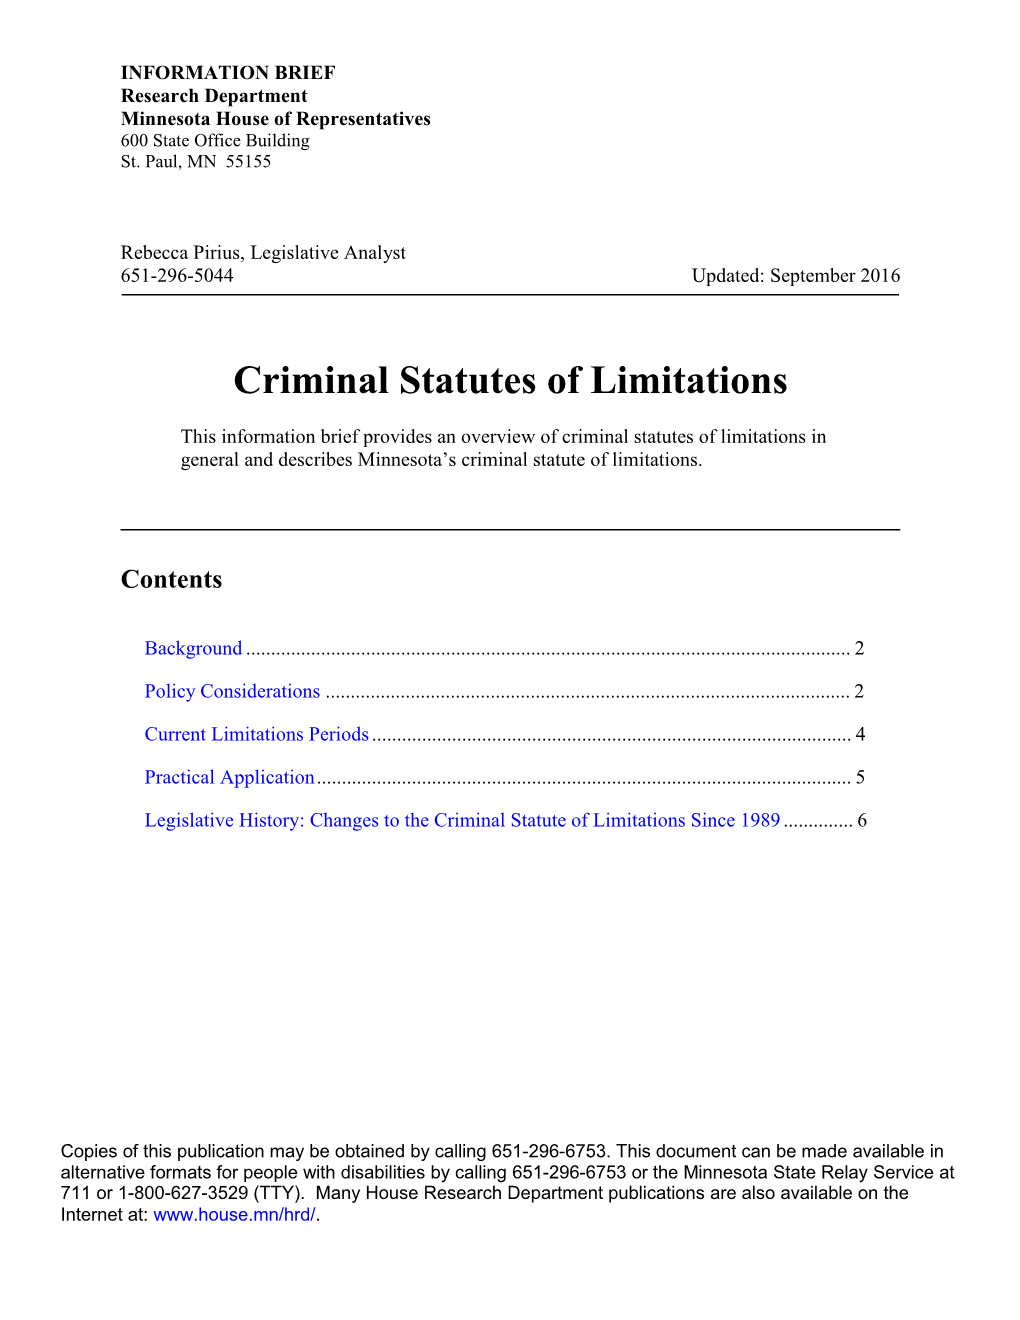 Criminal Statutes of Limitations